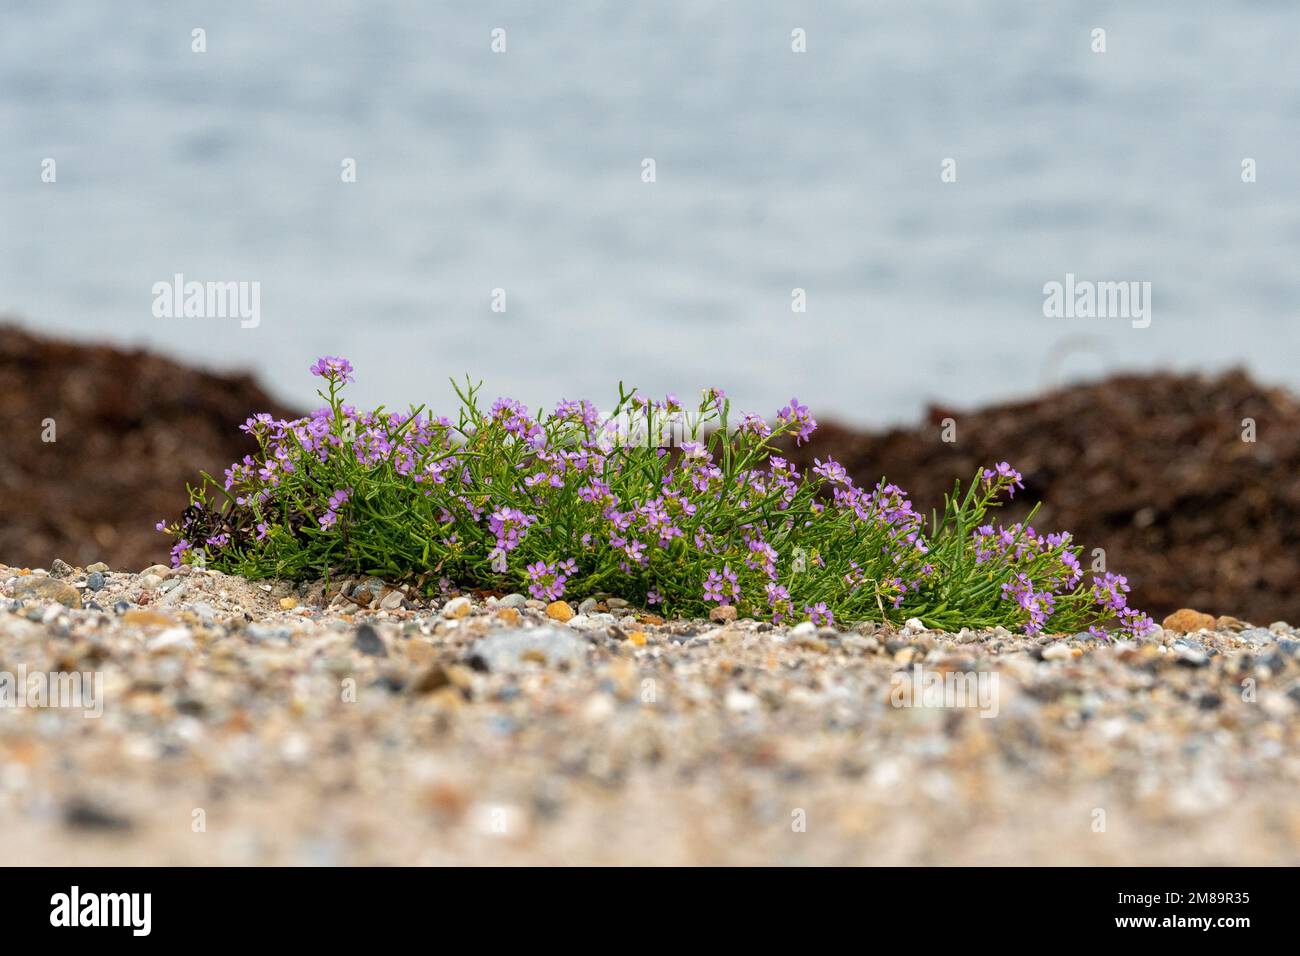 A bush of sea rocket (Cakile maritima) flowers on the beach in Germany Stock Photo